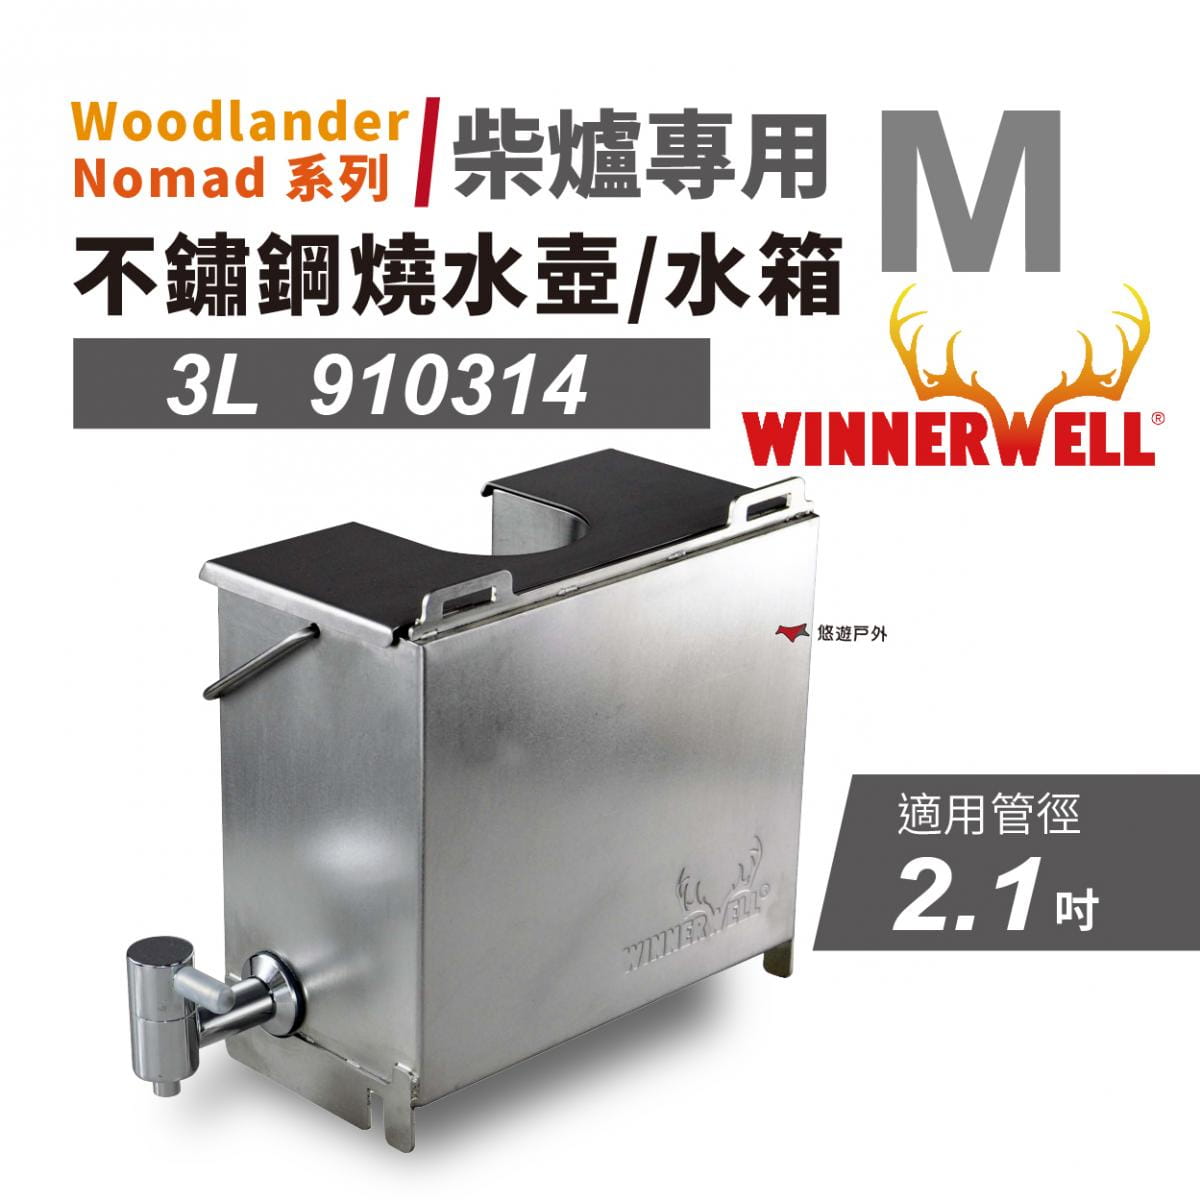 【WINNERWELL】柴爐專用不鏽鋼燒水壺_M號 (悠遊戶外) 0